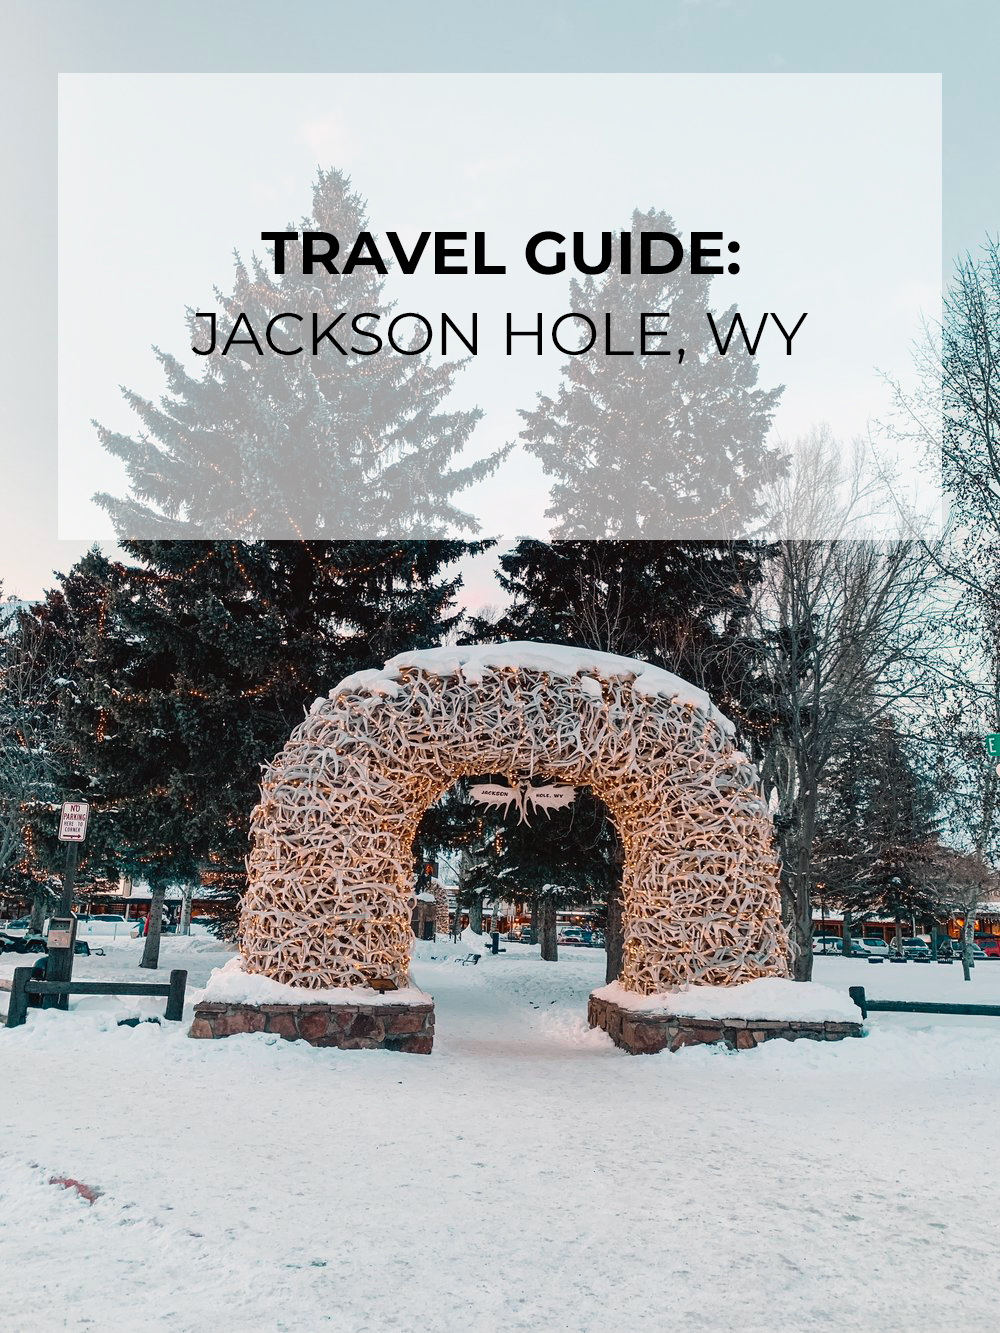 Travel Guide Aspen Colorado